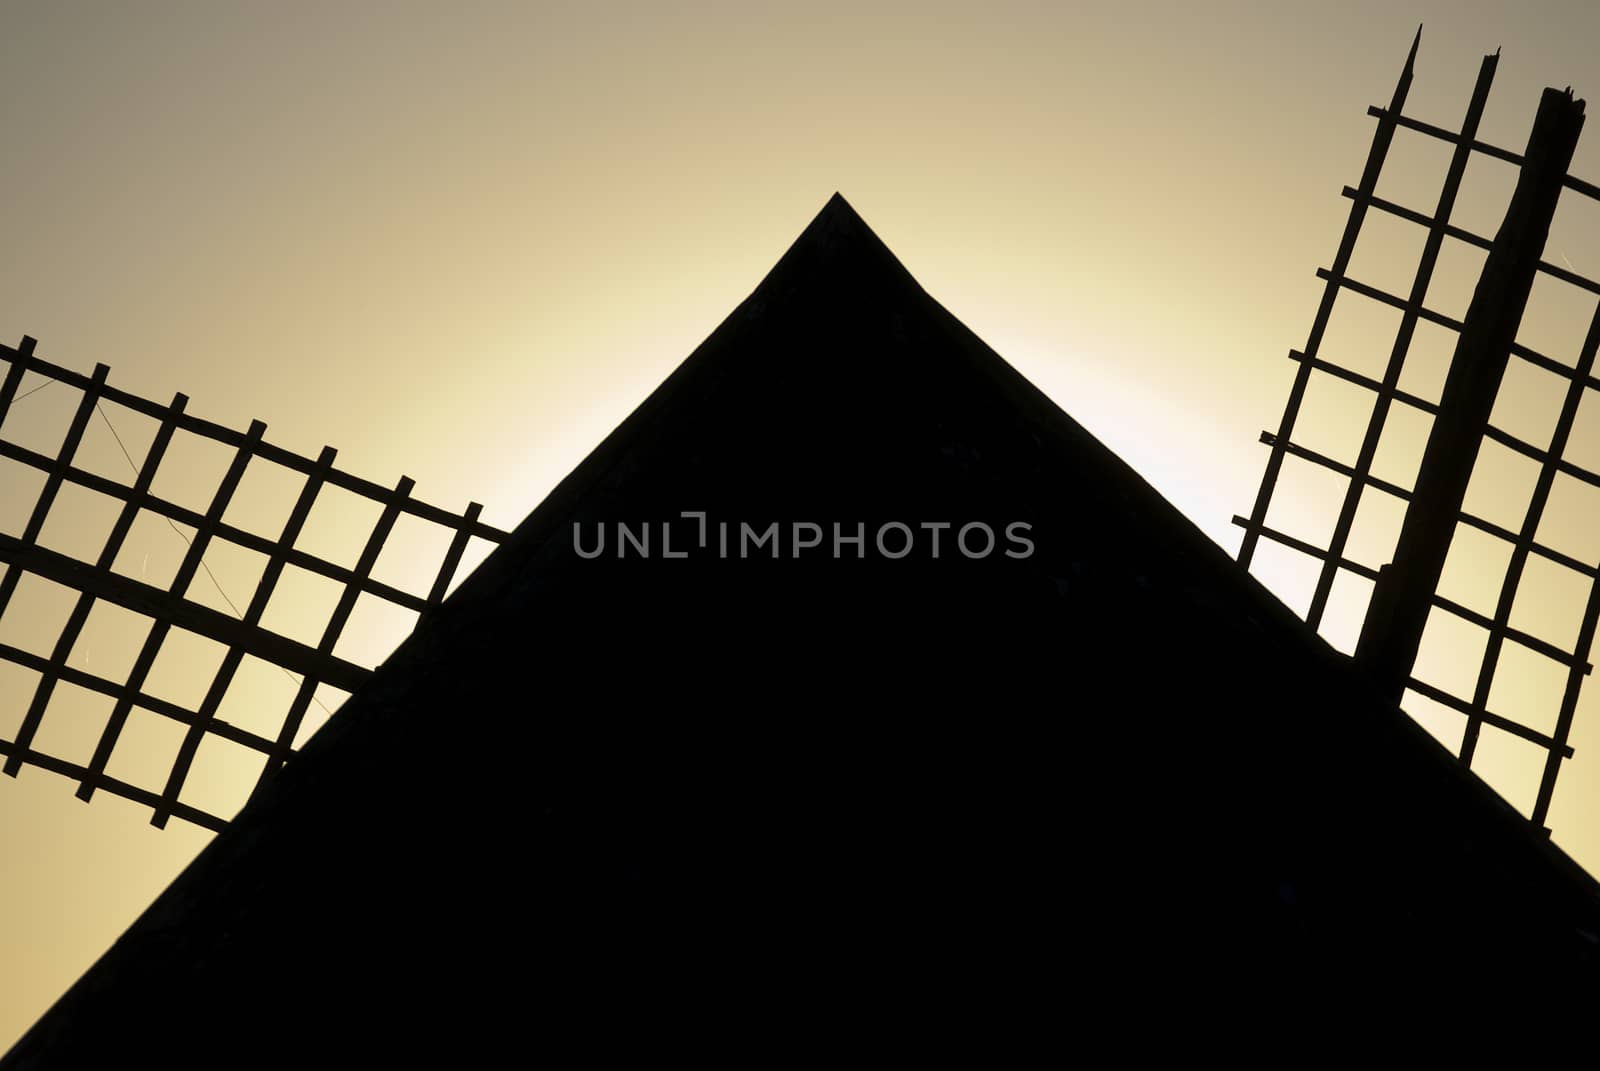 Windmills, Wind energy, Nocturnal Campo de Criptana, Ciudad Real, Spain